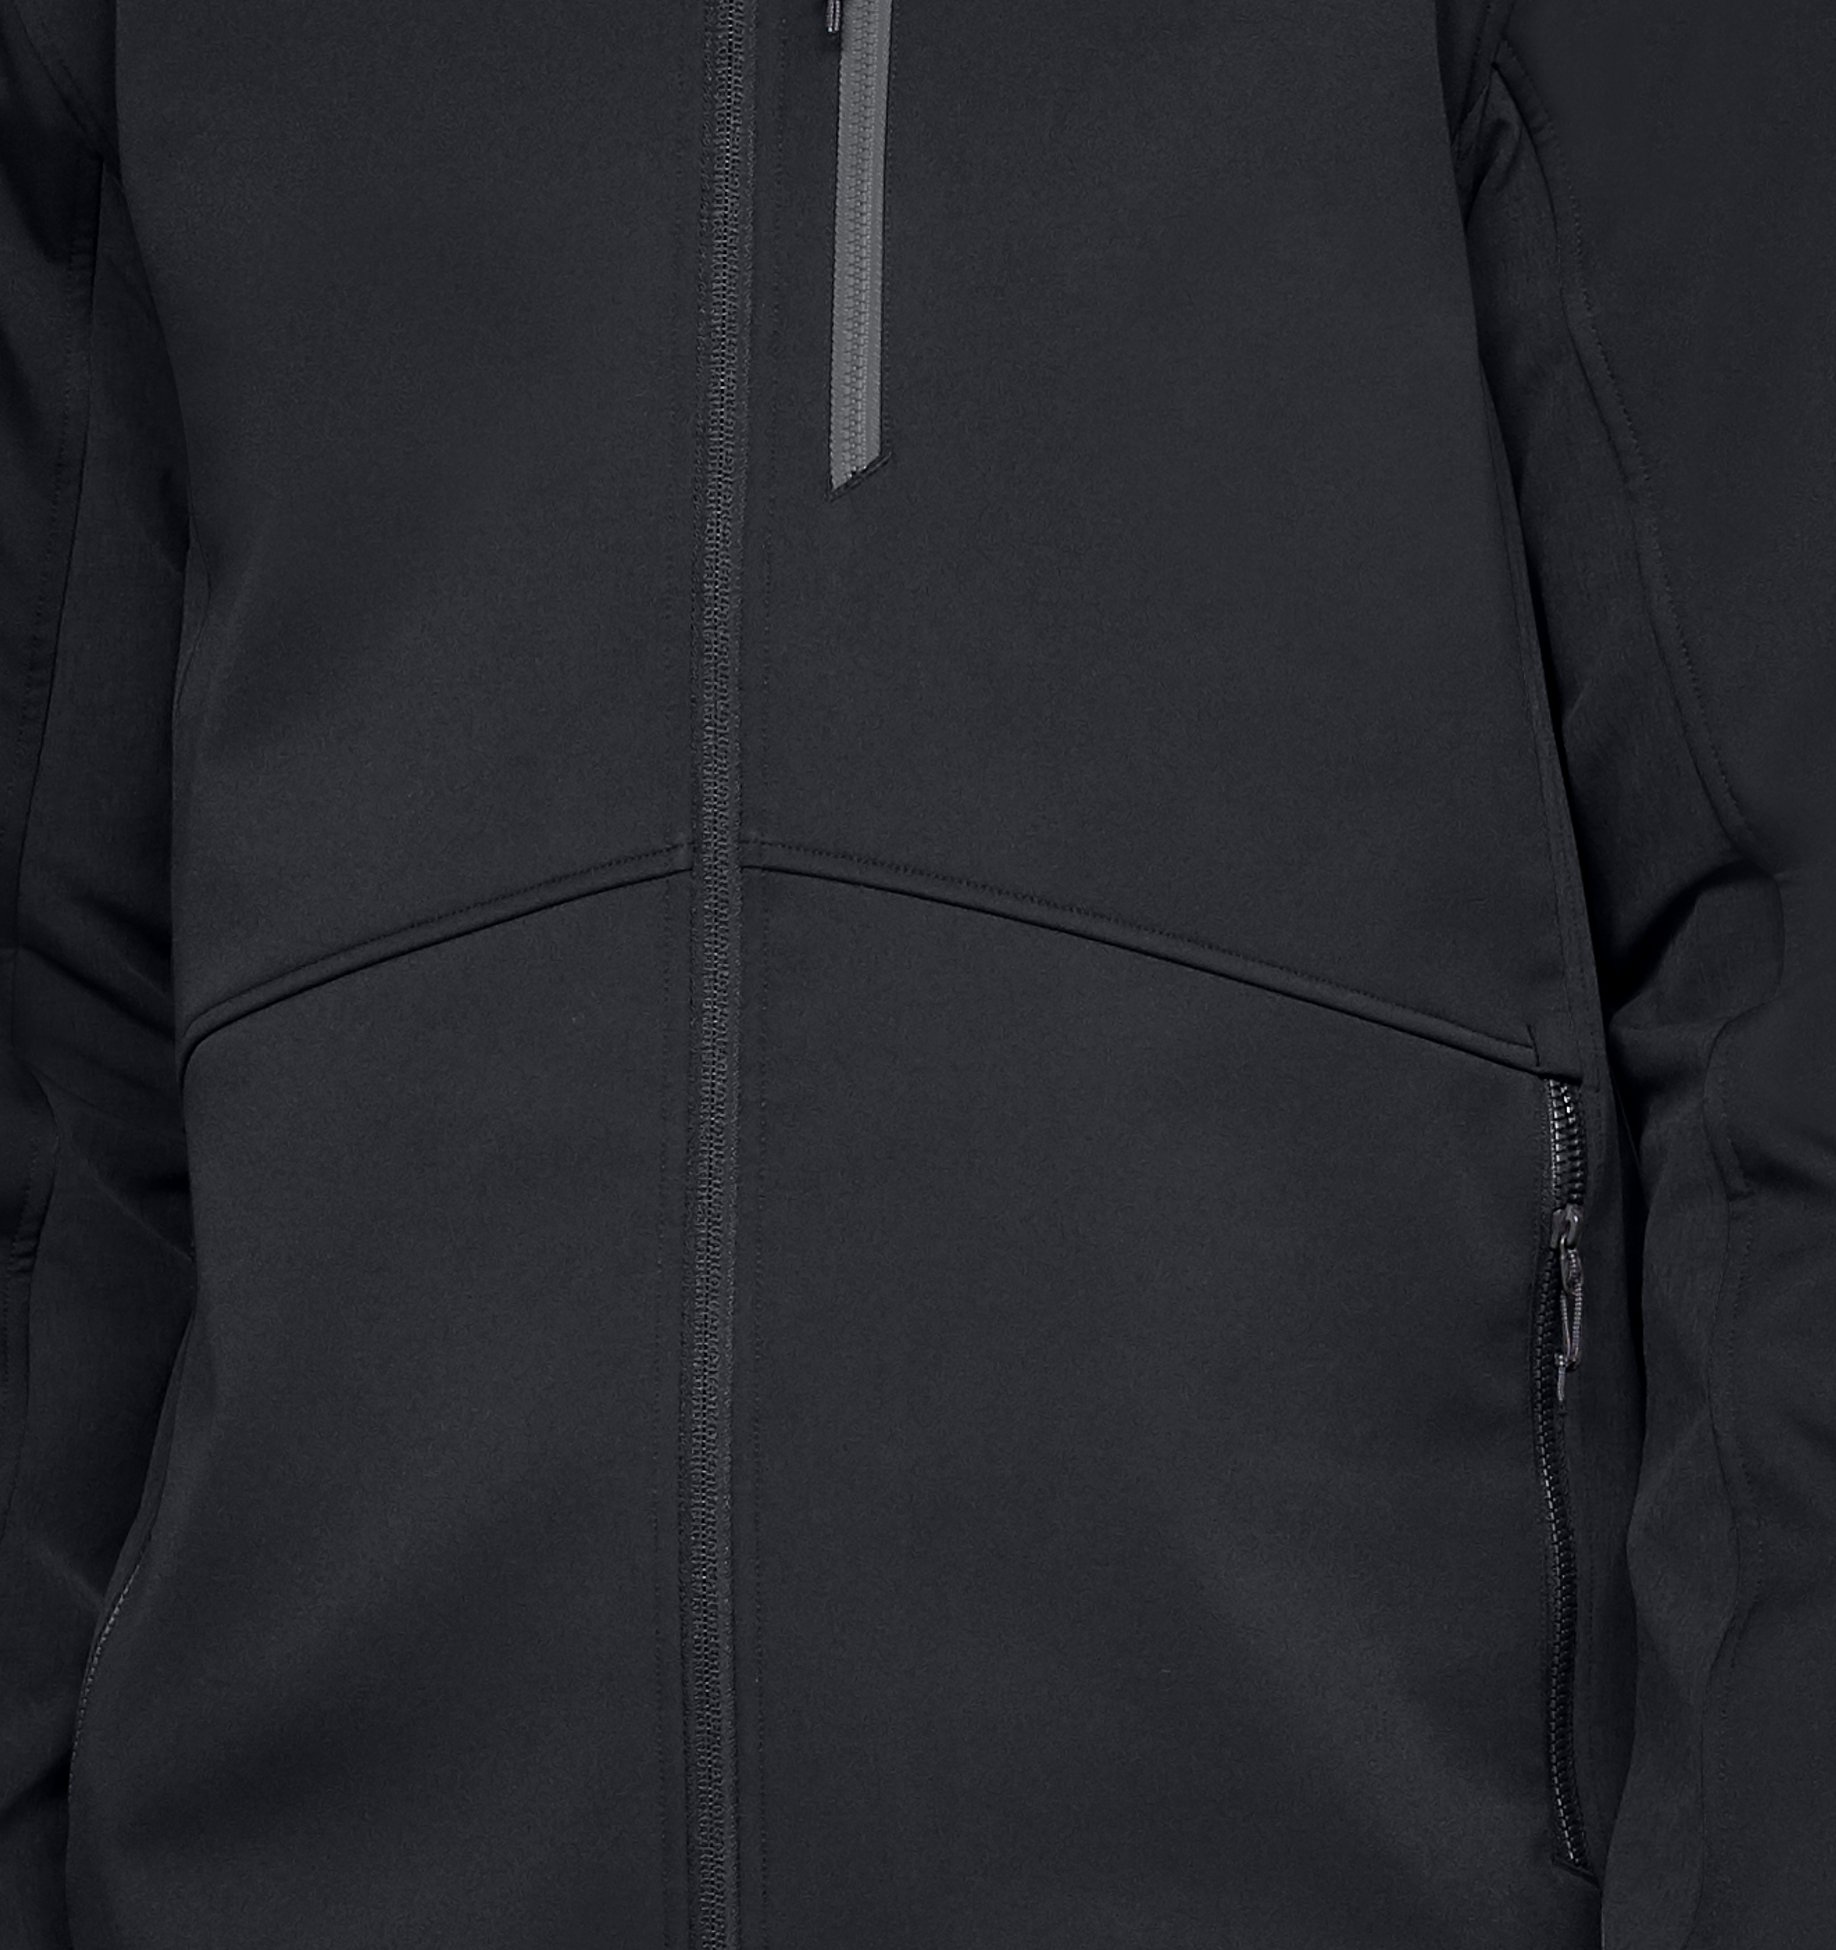 UNDER ARMOUR MENS ColdGear Infrared Shield Jacket Coat Adults Windbreaker  £60.00 - PicClick UK